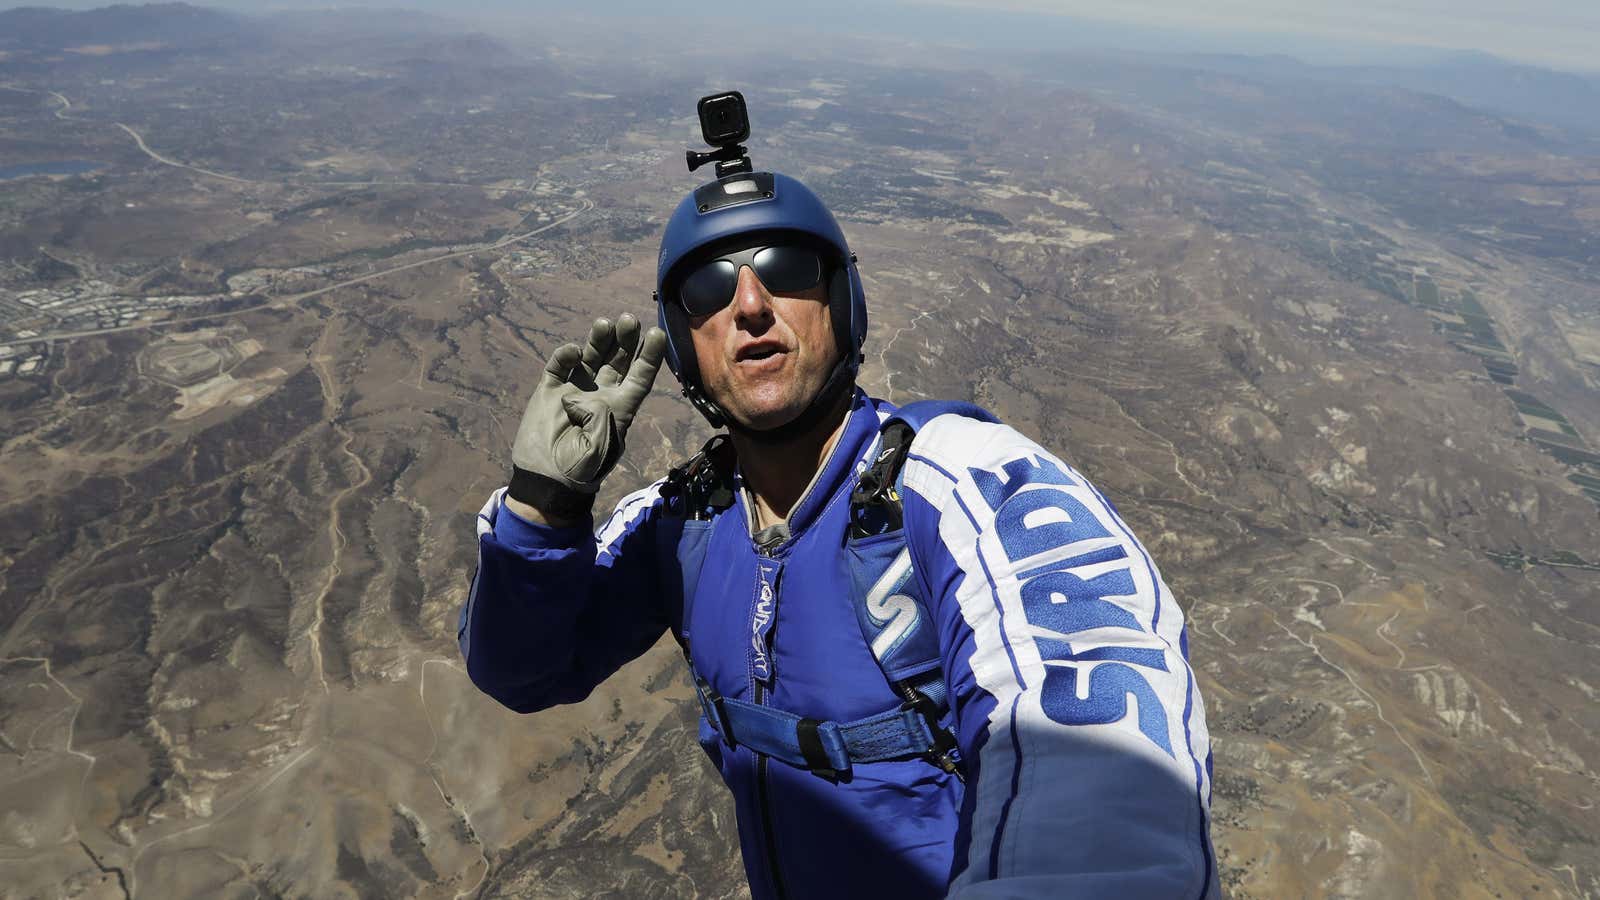 Skydiver Luke Aikins doing a test jump on July 25.